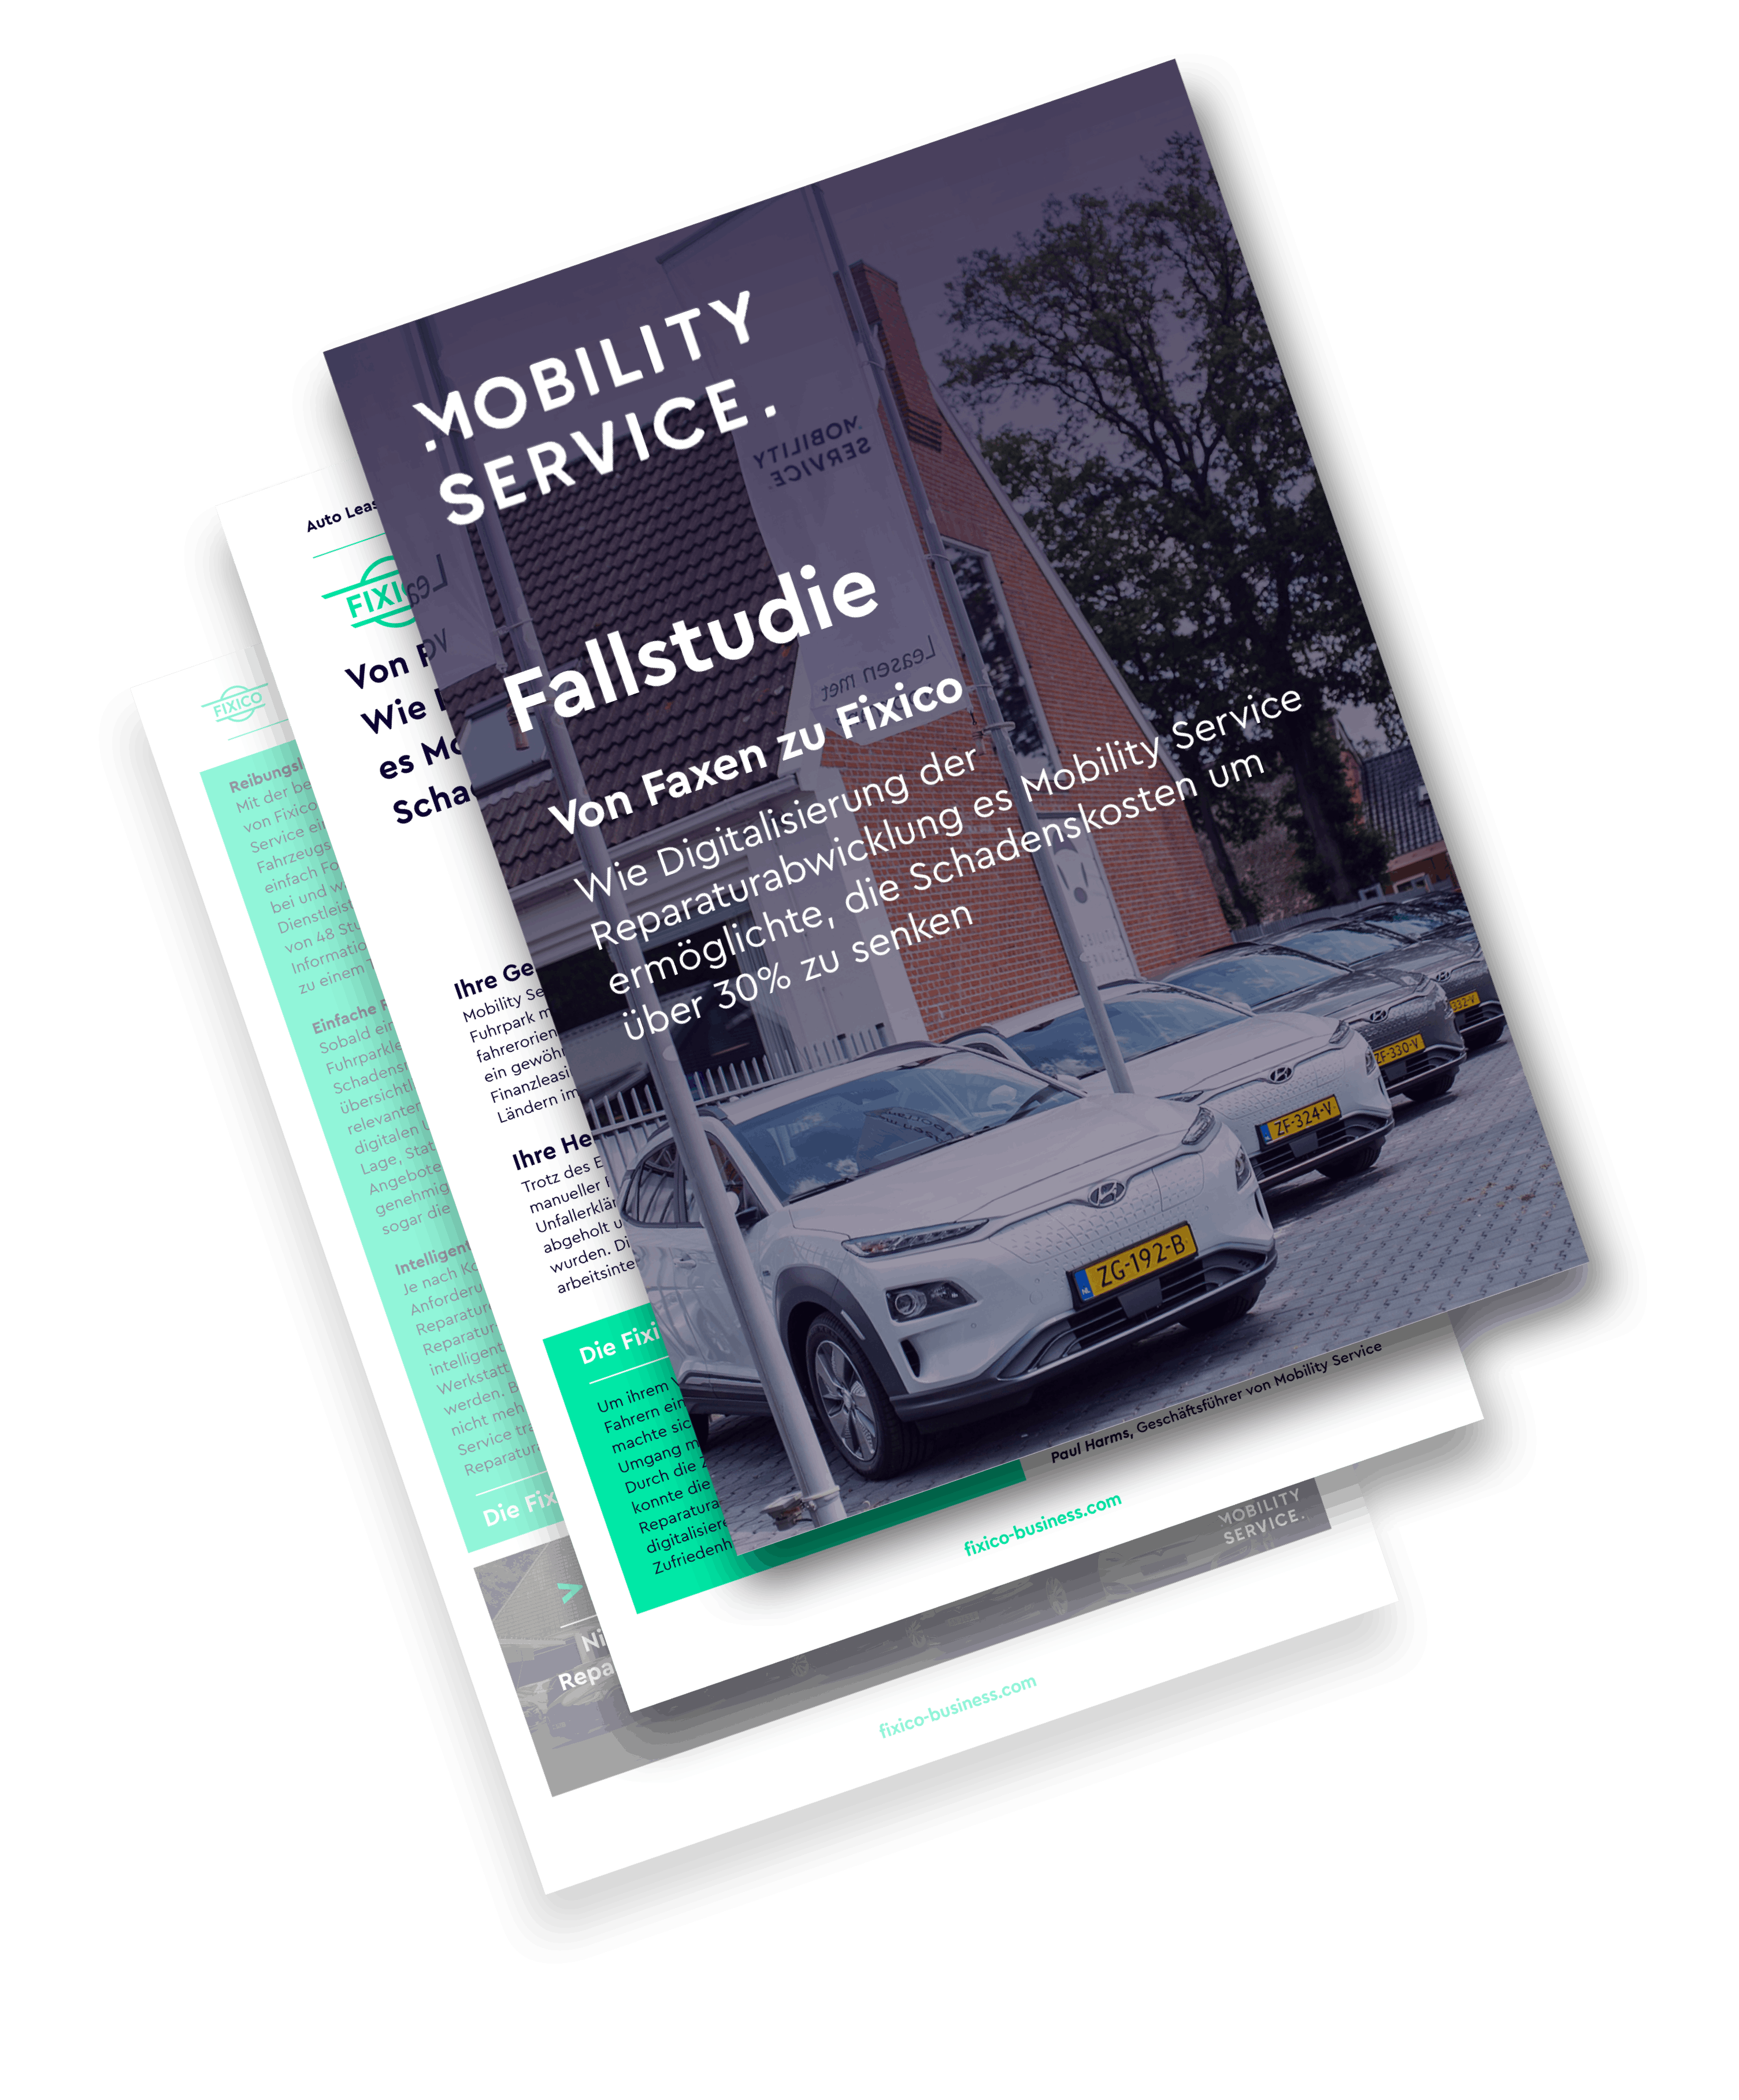 Mobility Service Case Study